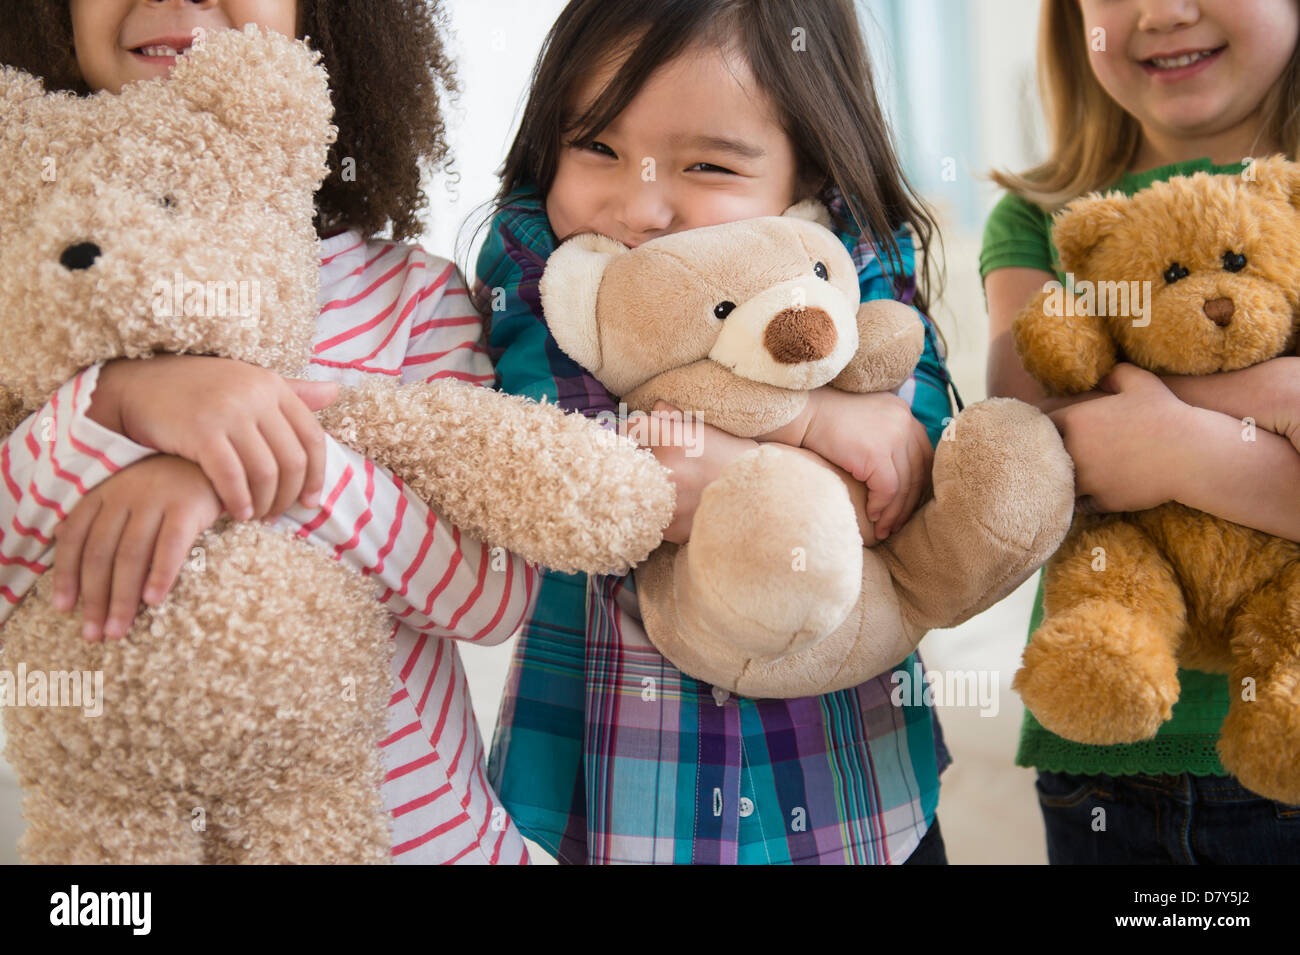 Girls hugging teddy bears Banque D'Images